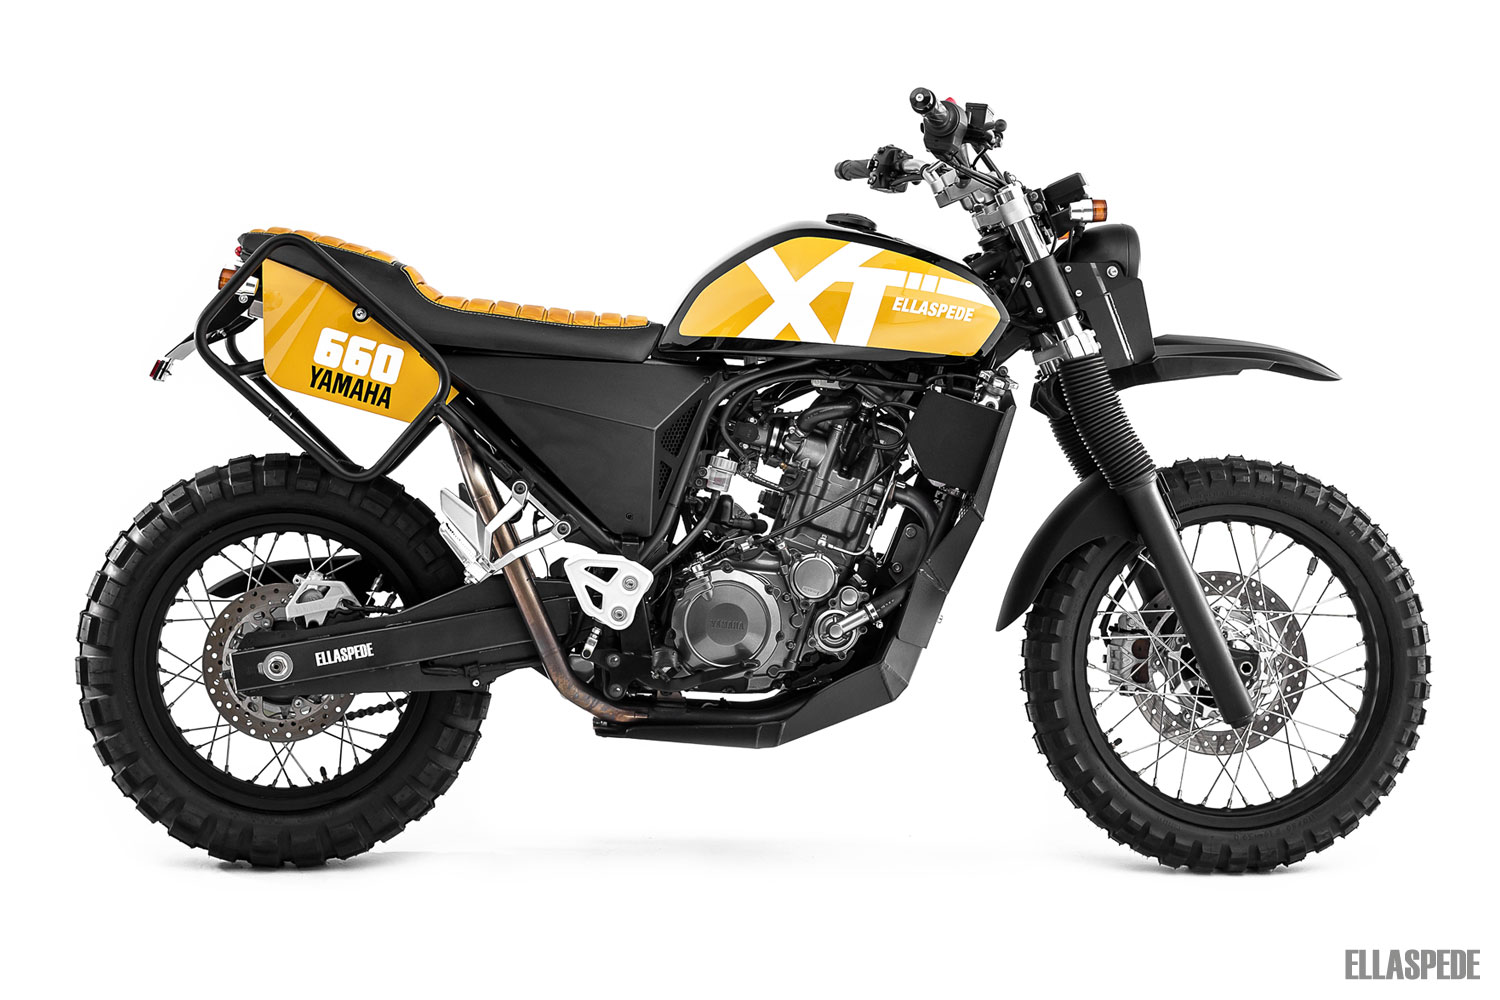 EB141 – 2014 Yamaha XT660R main image